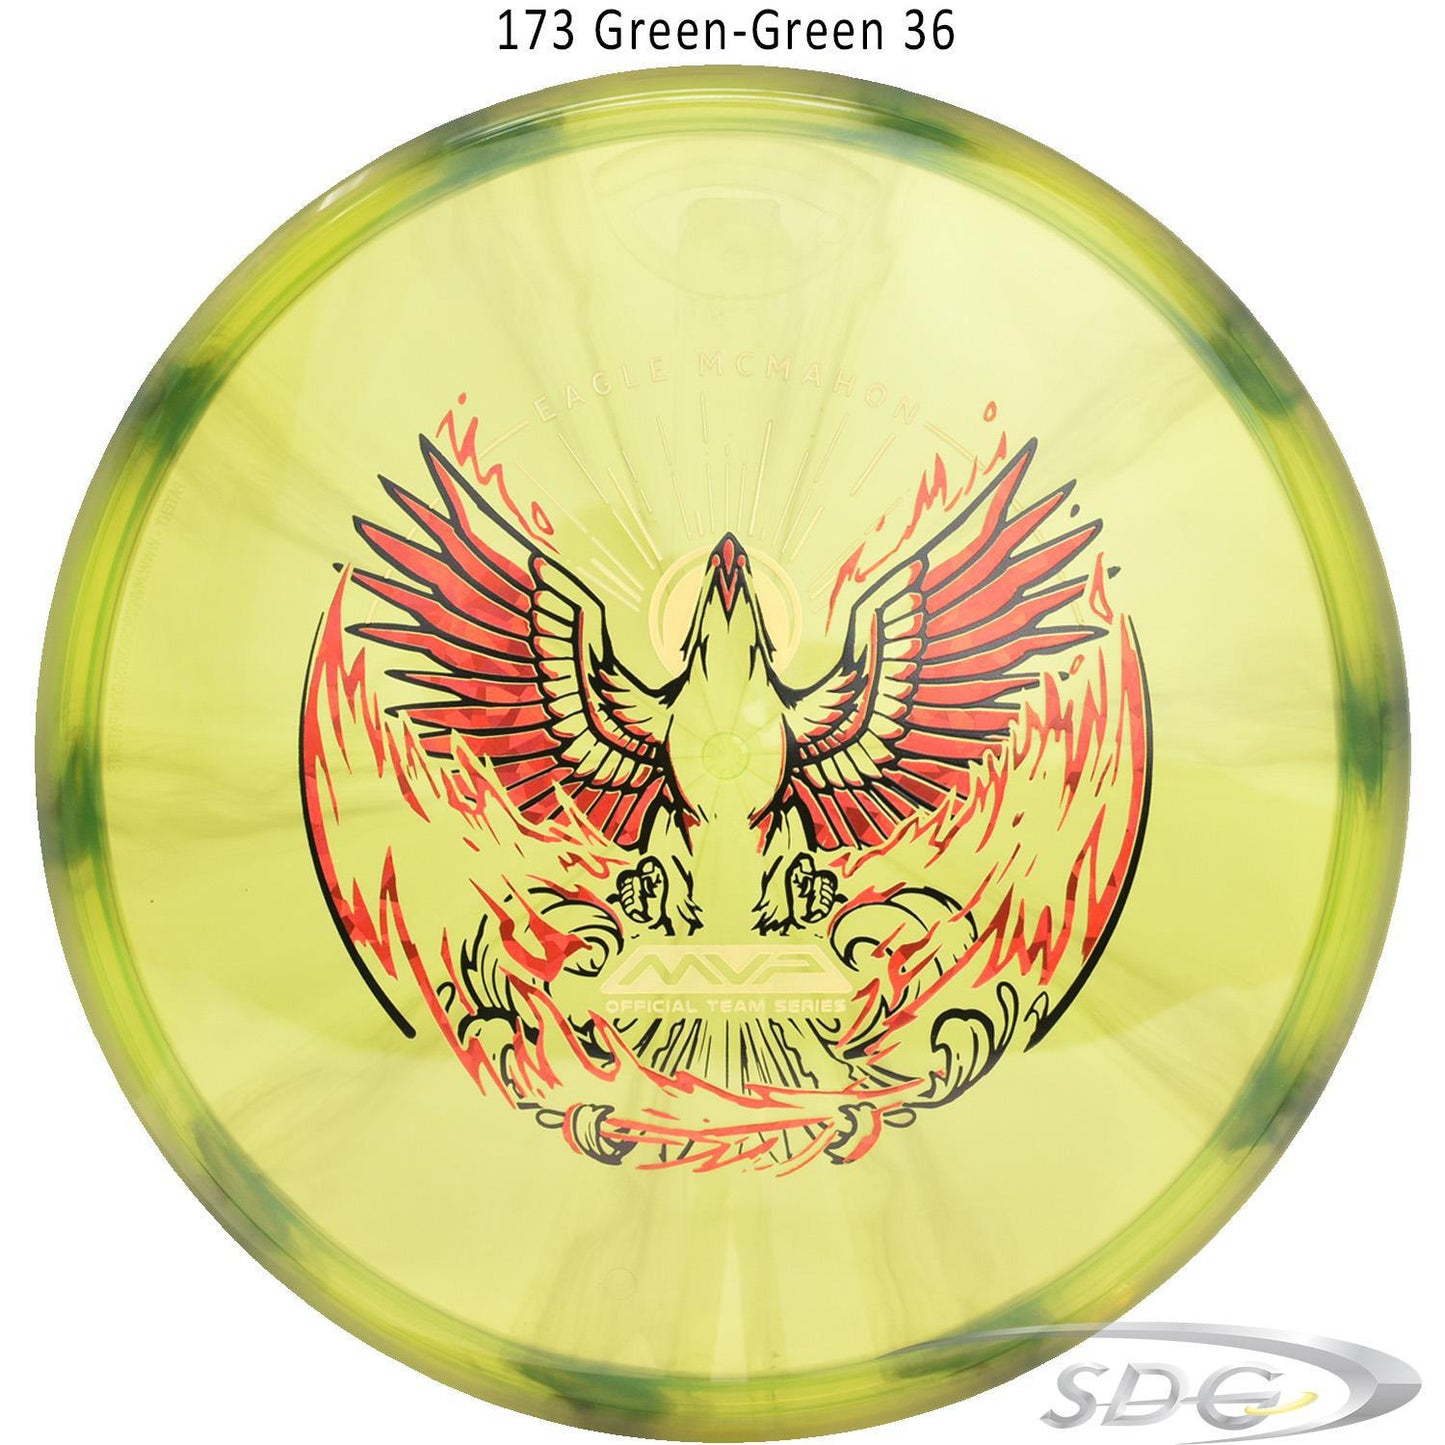 axiom-prism-proton-envy-rebirth-eagle-mcmahon-team-series-disc-golf-putter 173 Green-Green 36 